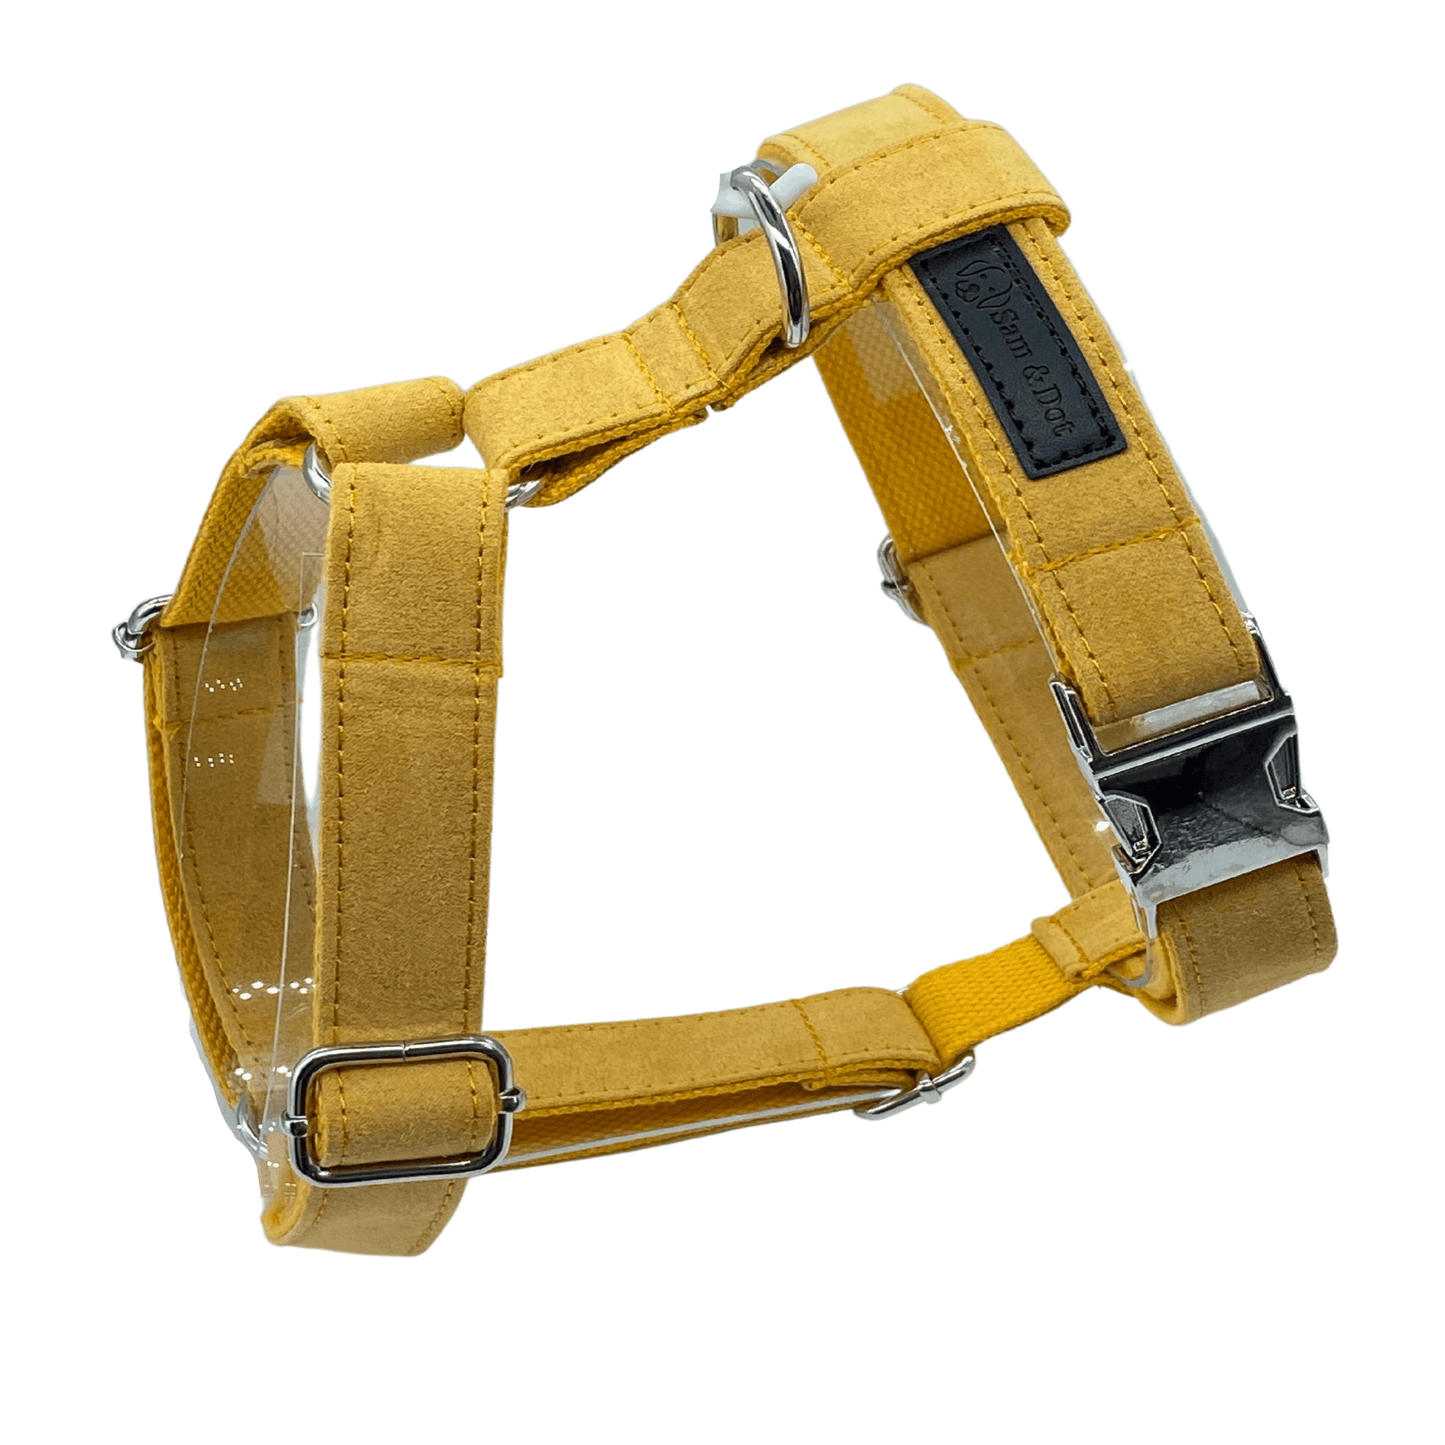 Bright Yellow Customized Dog Harness - Sam and Dot